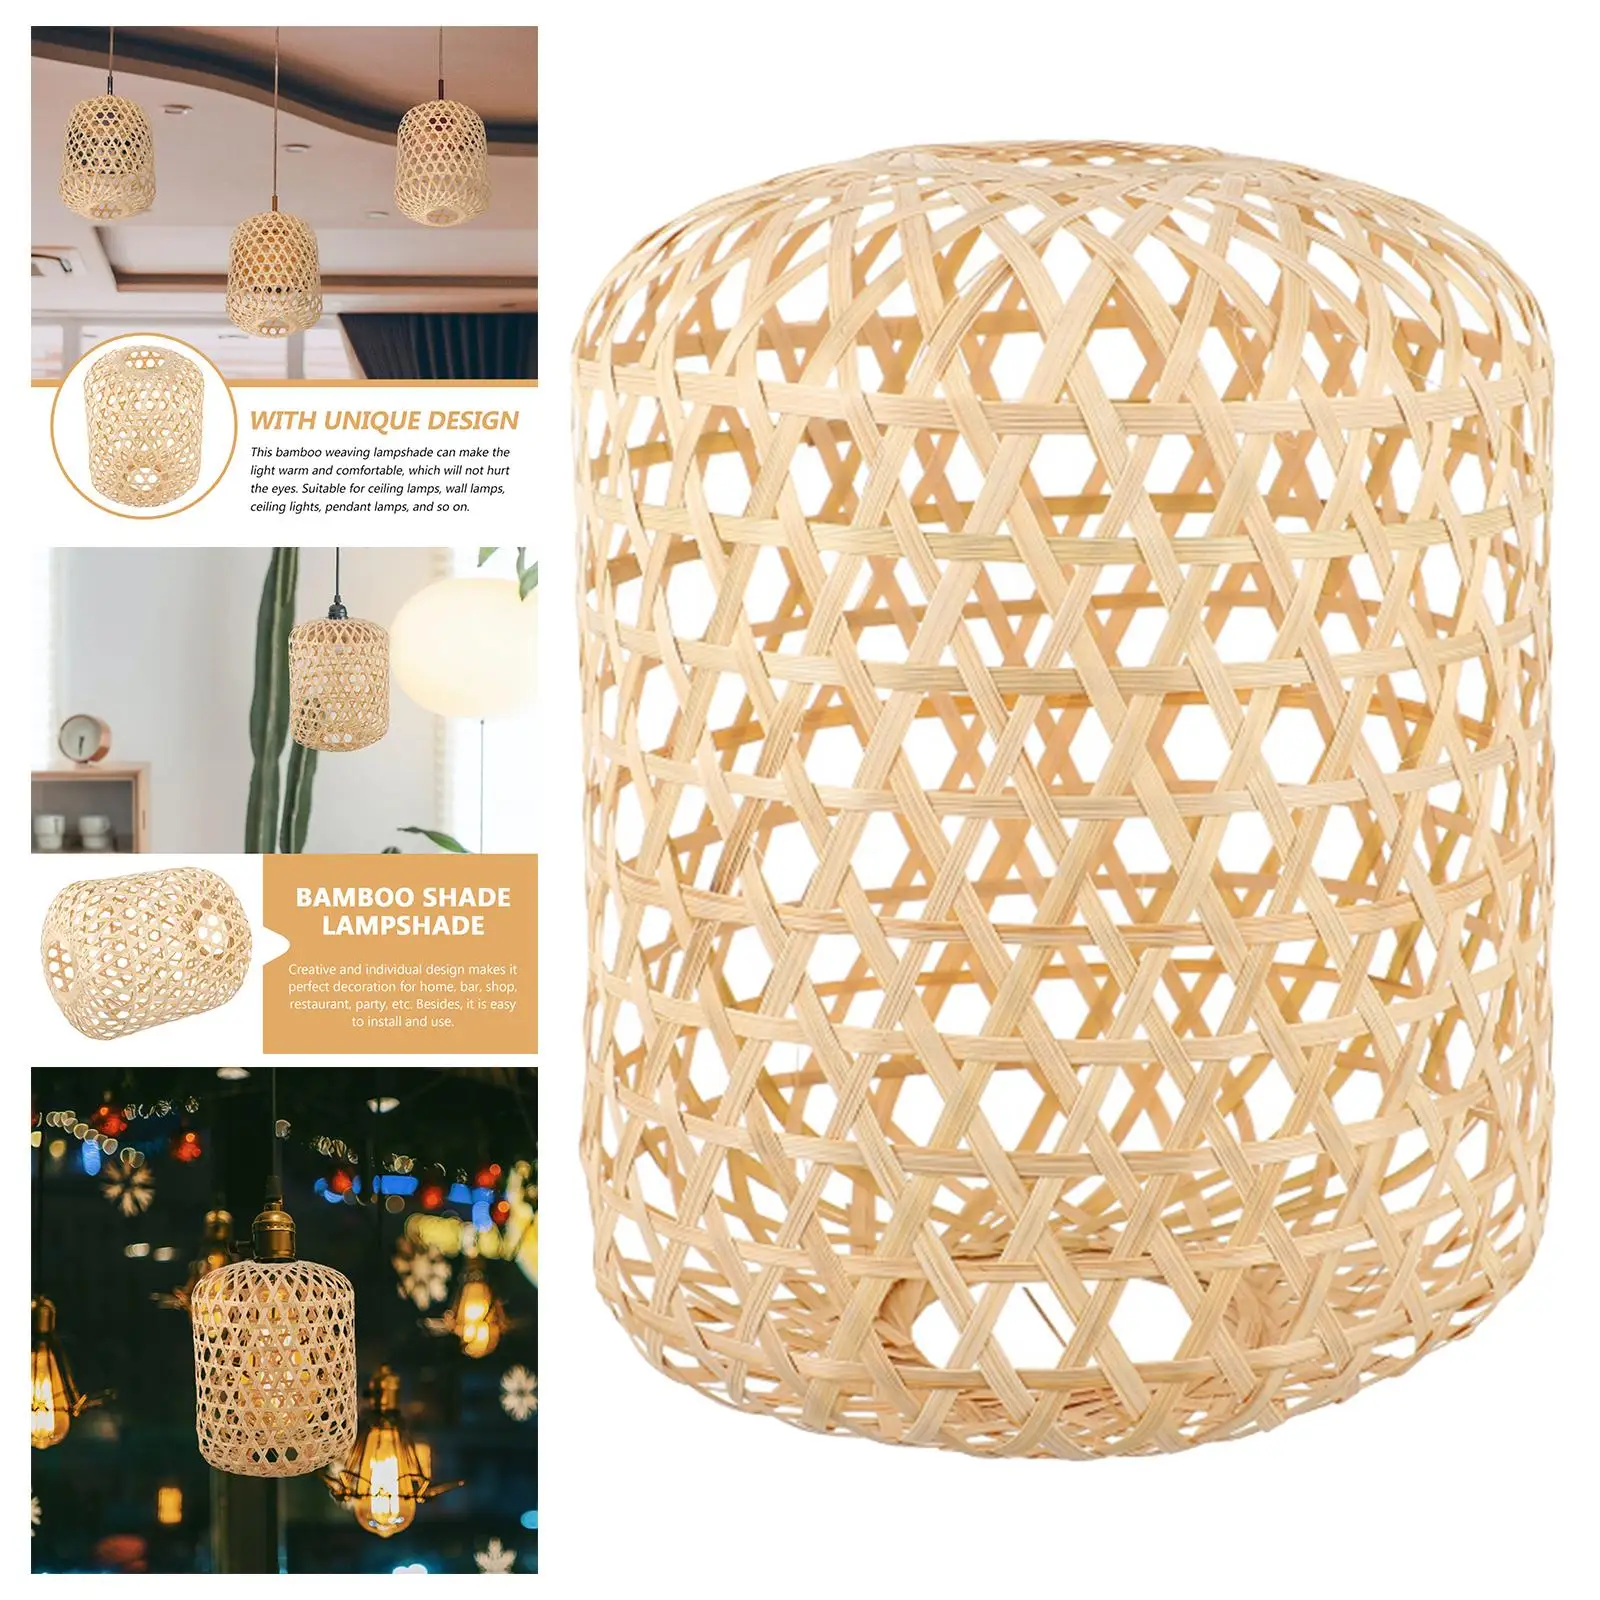 Bamboo Woven Pendant Light Shade Vintage Weave Rattan Basket for Hanging Light Fixture Ceiling Light Chandelier Lamp Holder Cafe